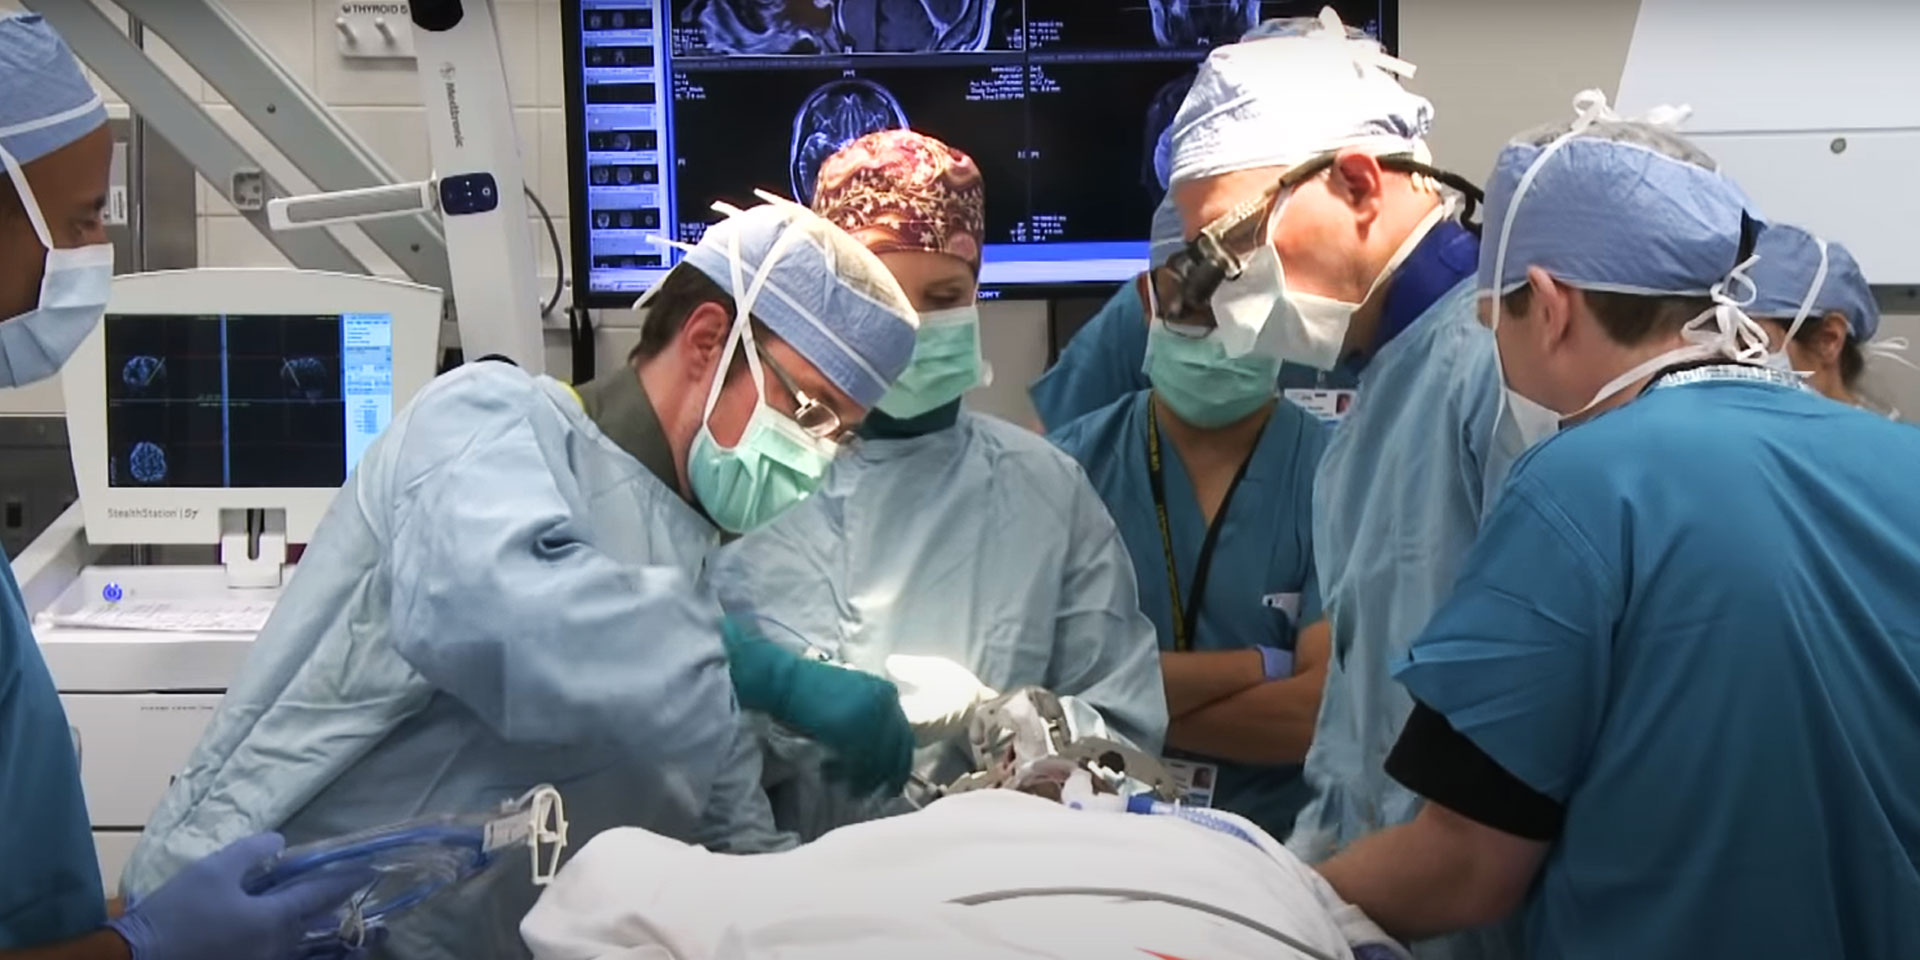 The Seattle Children's neurosurgery team in surgery